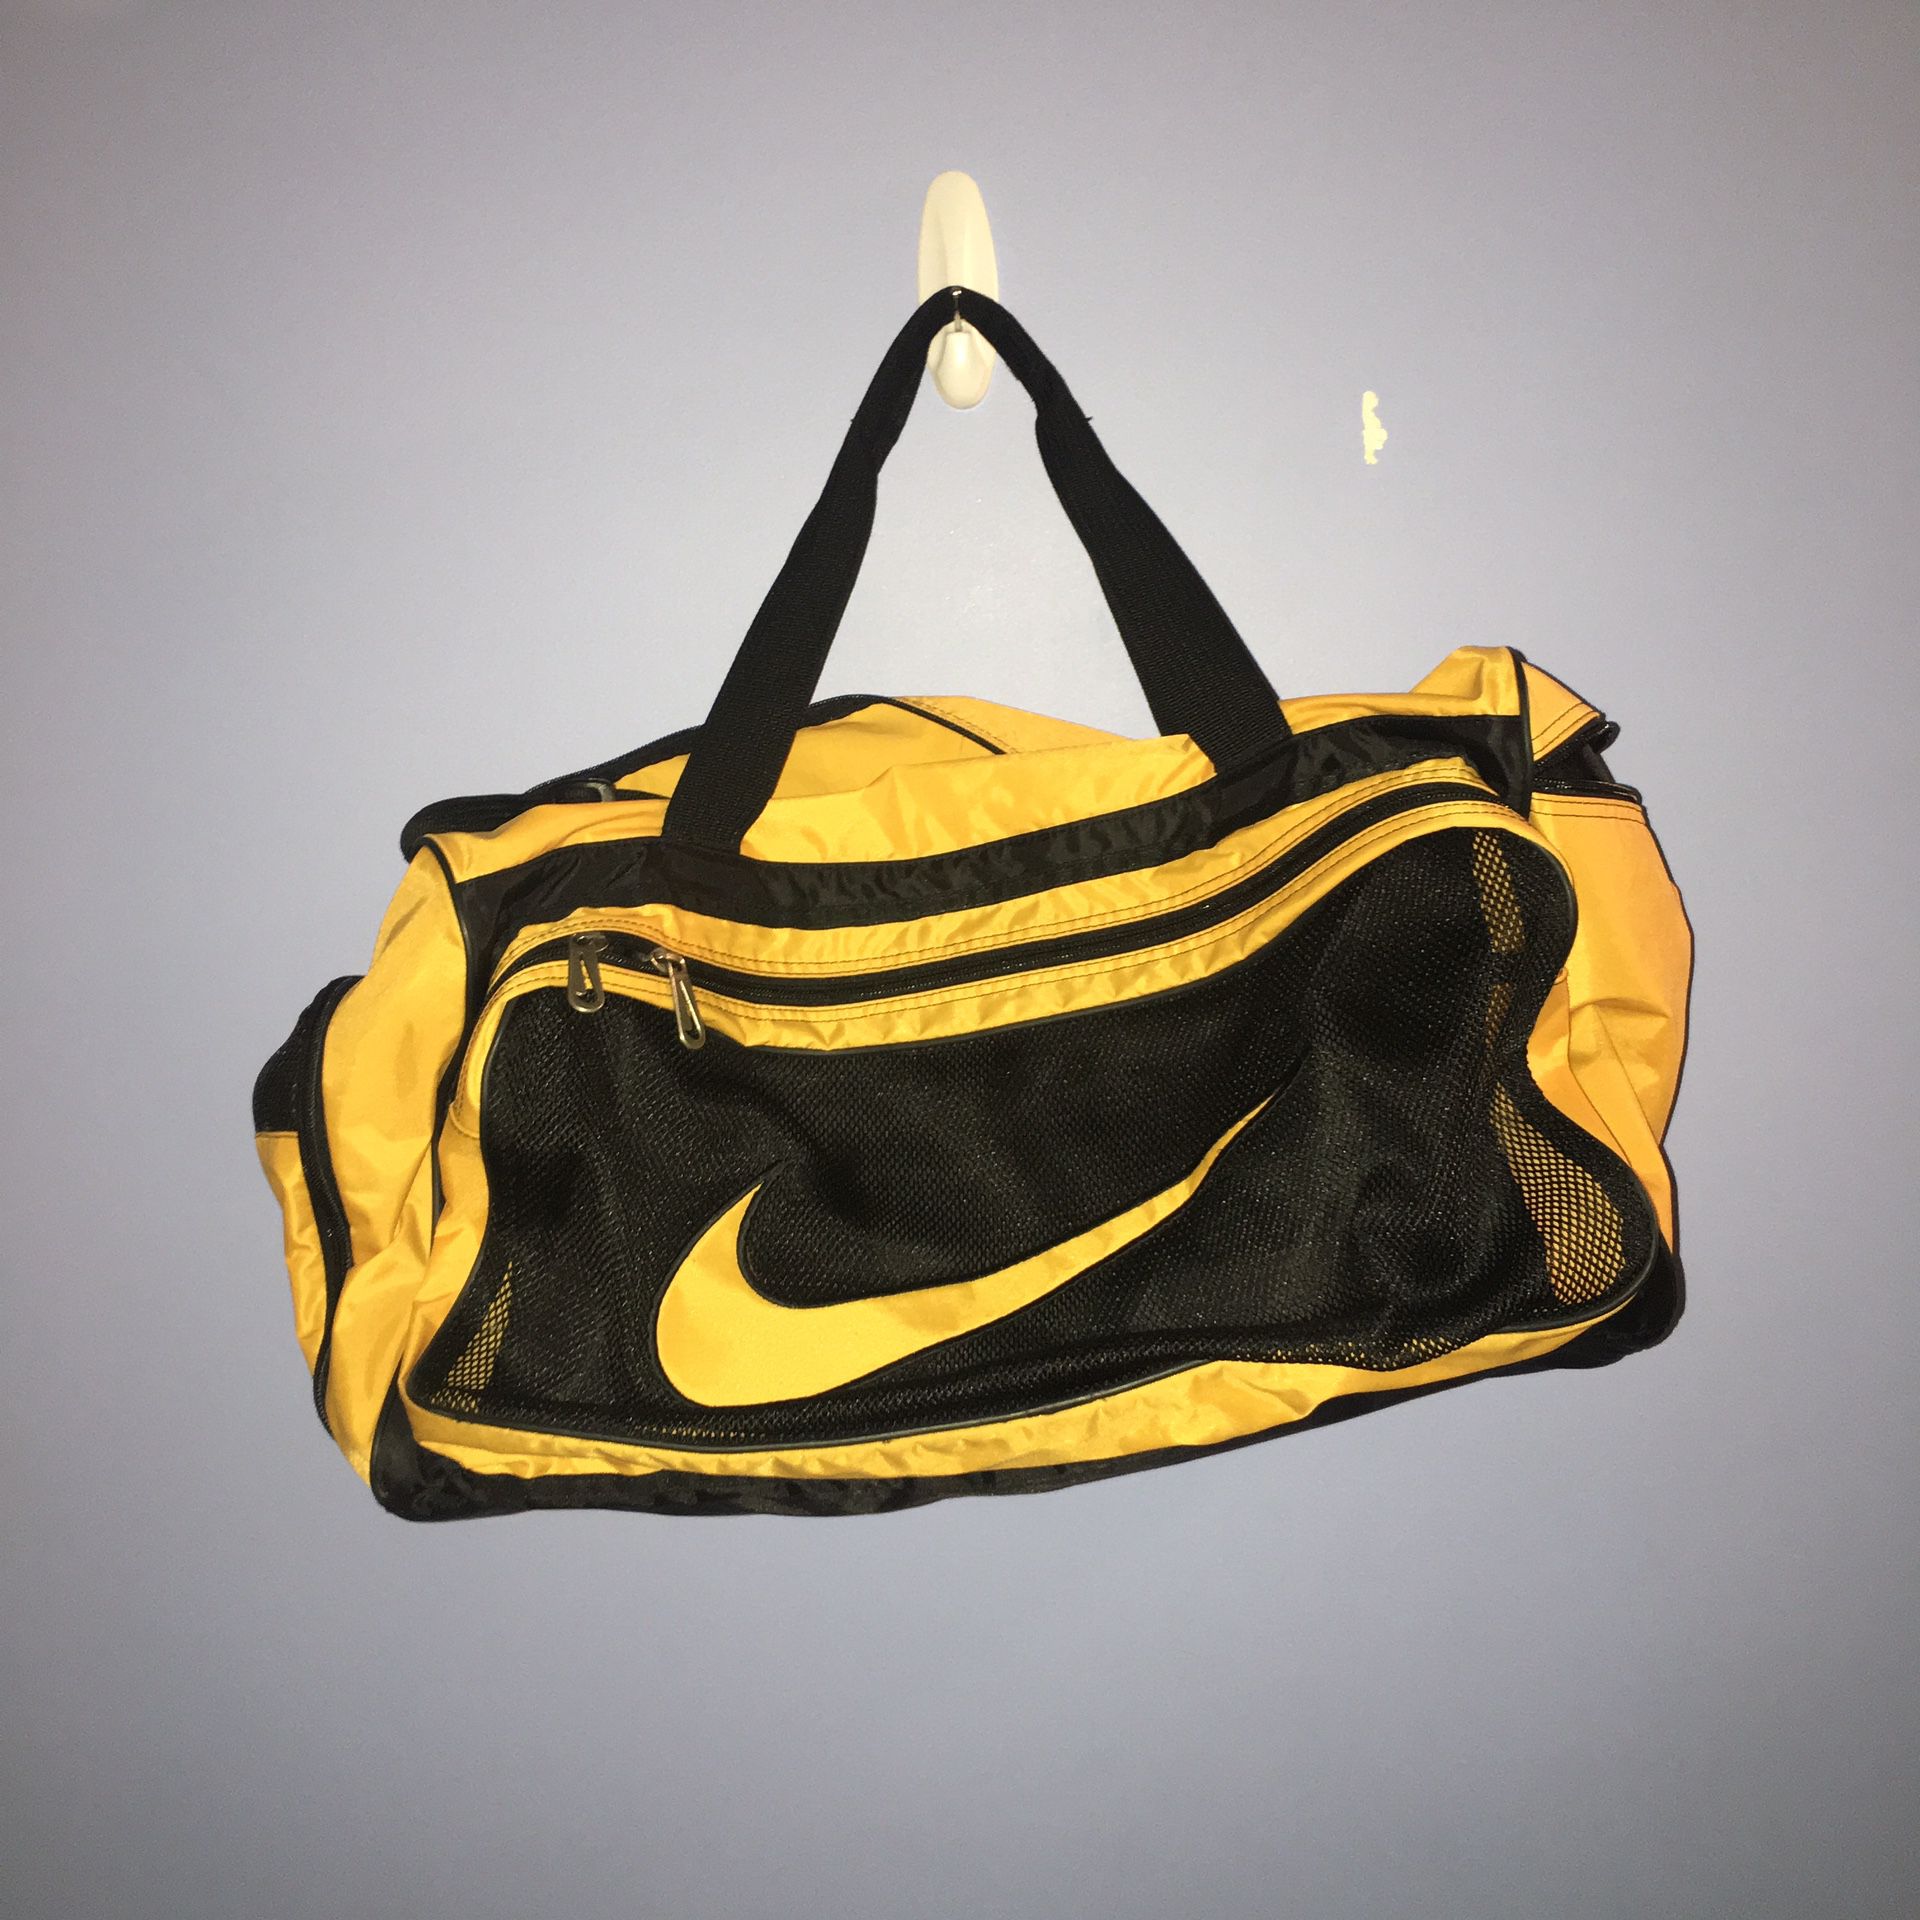 VTG 90s Nike Duffle Bag